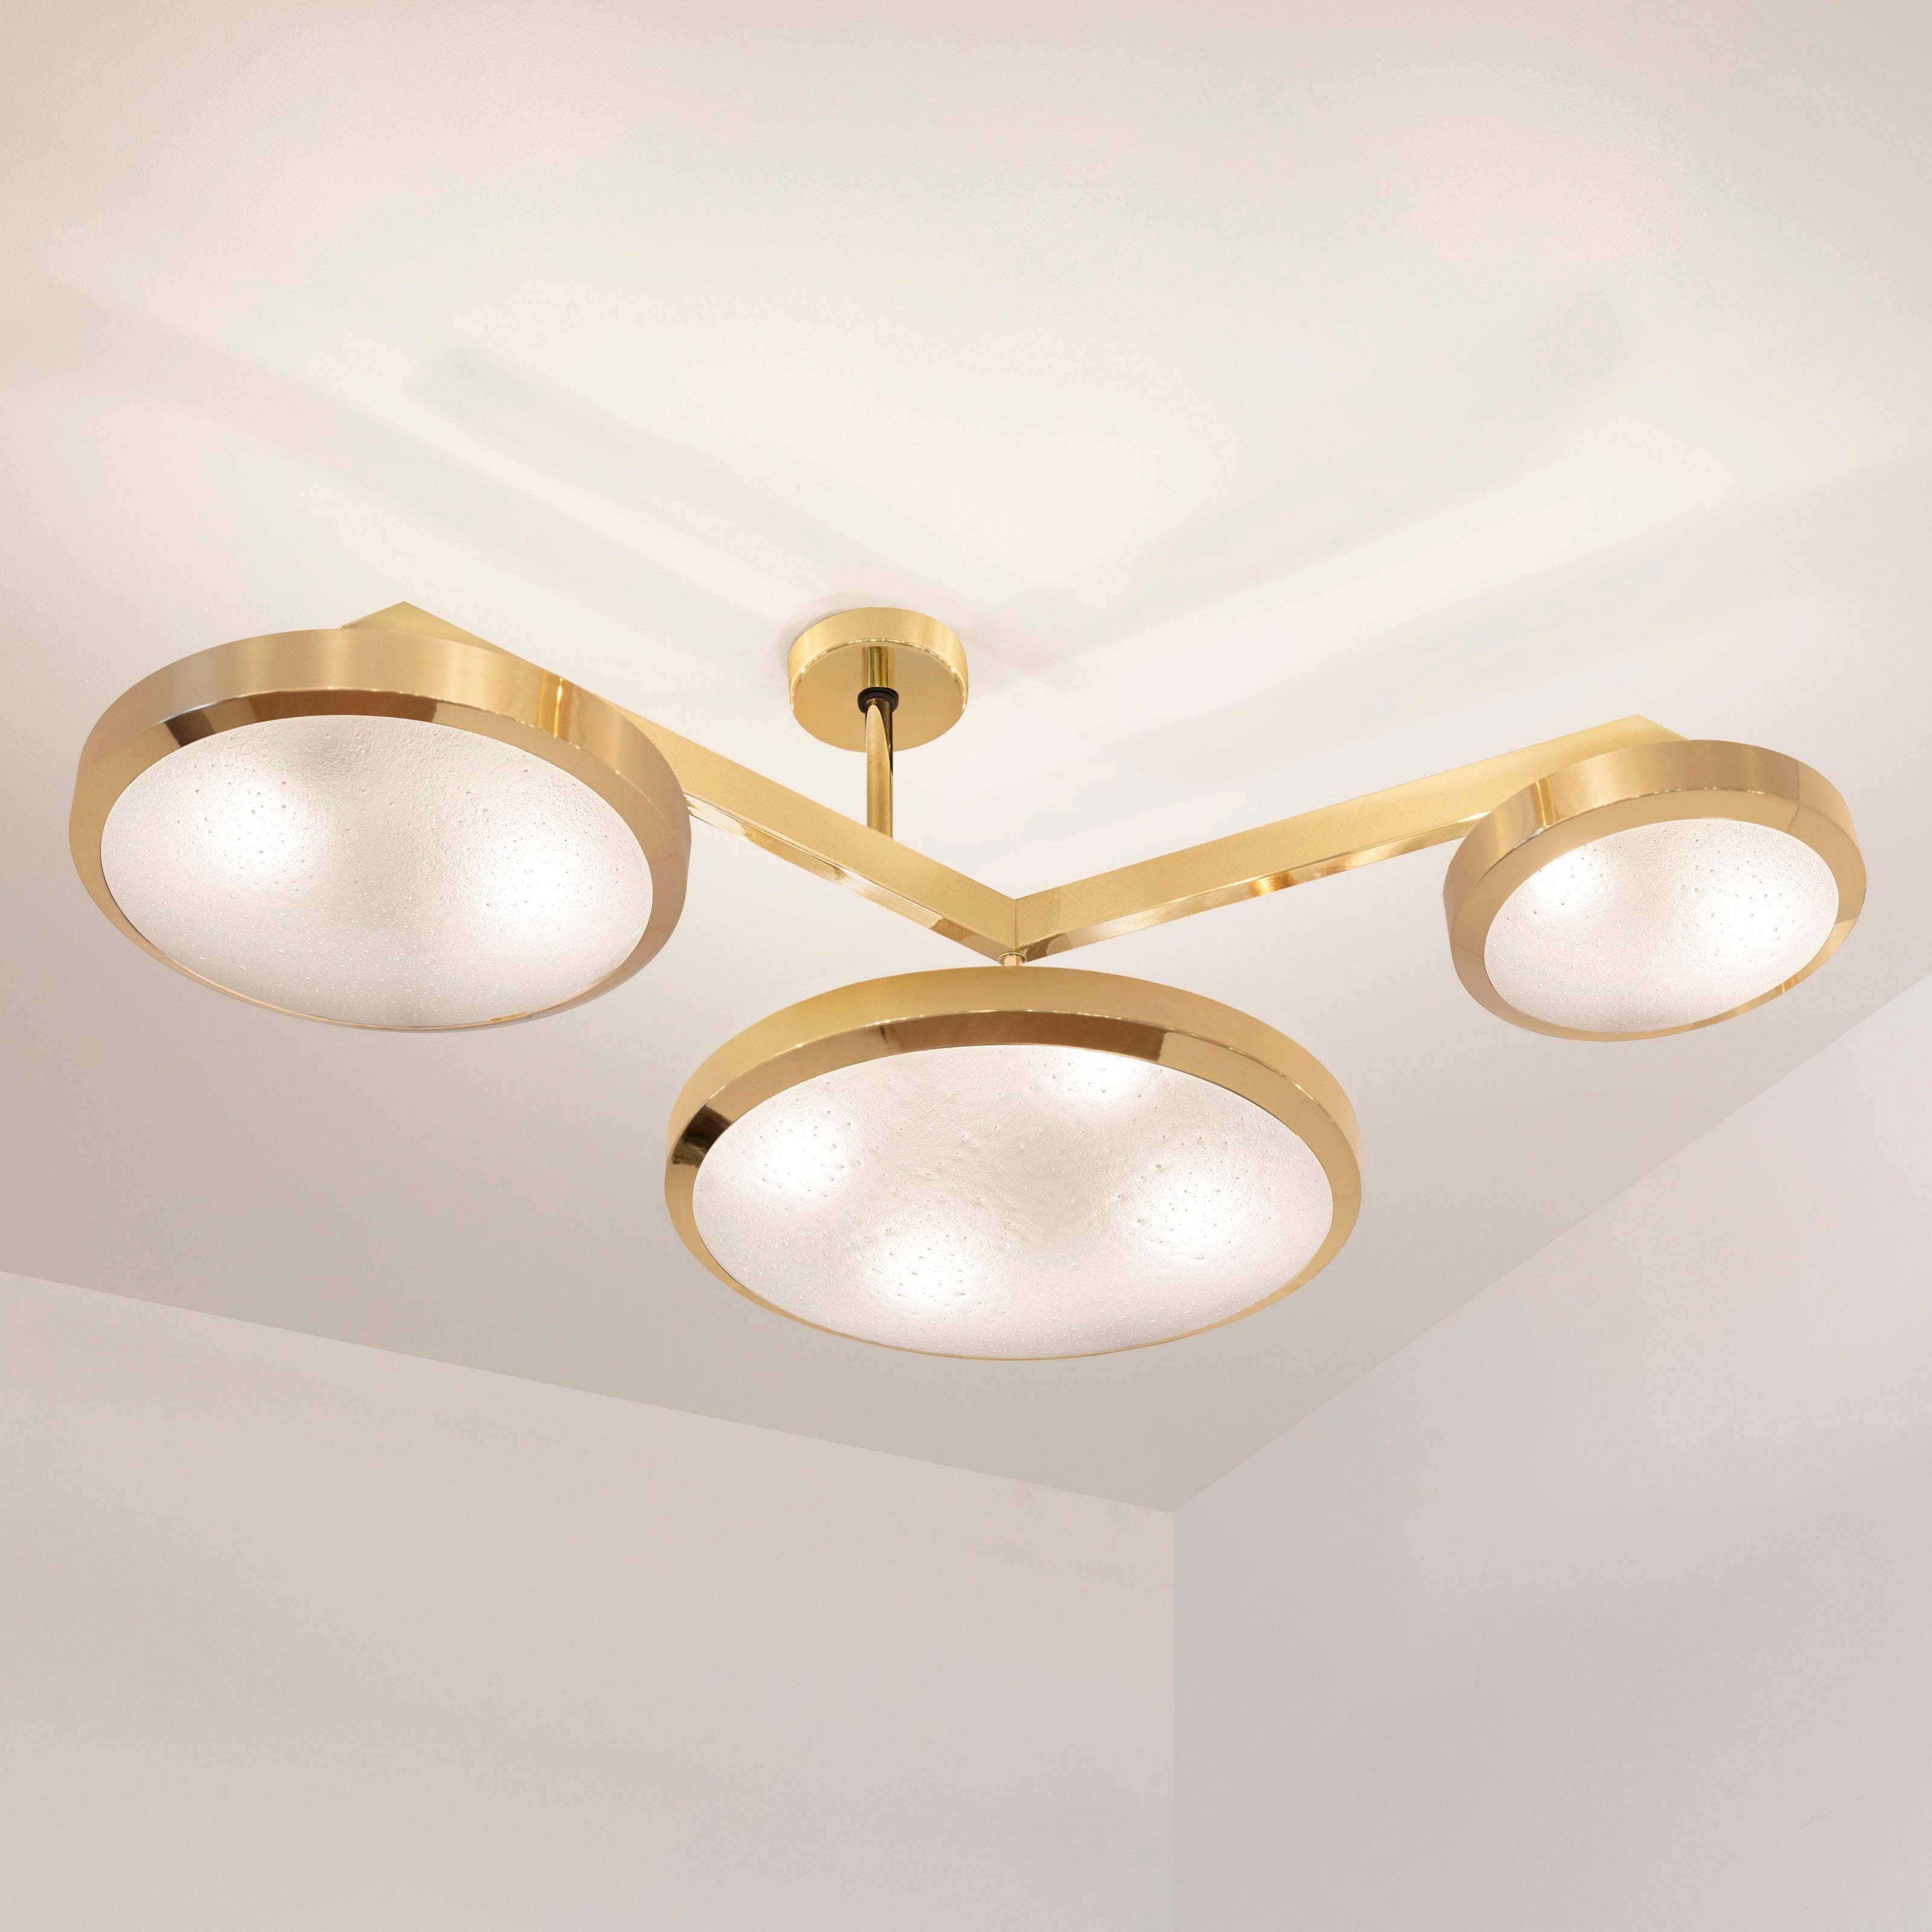 Italian Zeta Ceiling Light by Gaspare Asaro - Satin Brass Finish For Sale